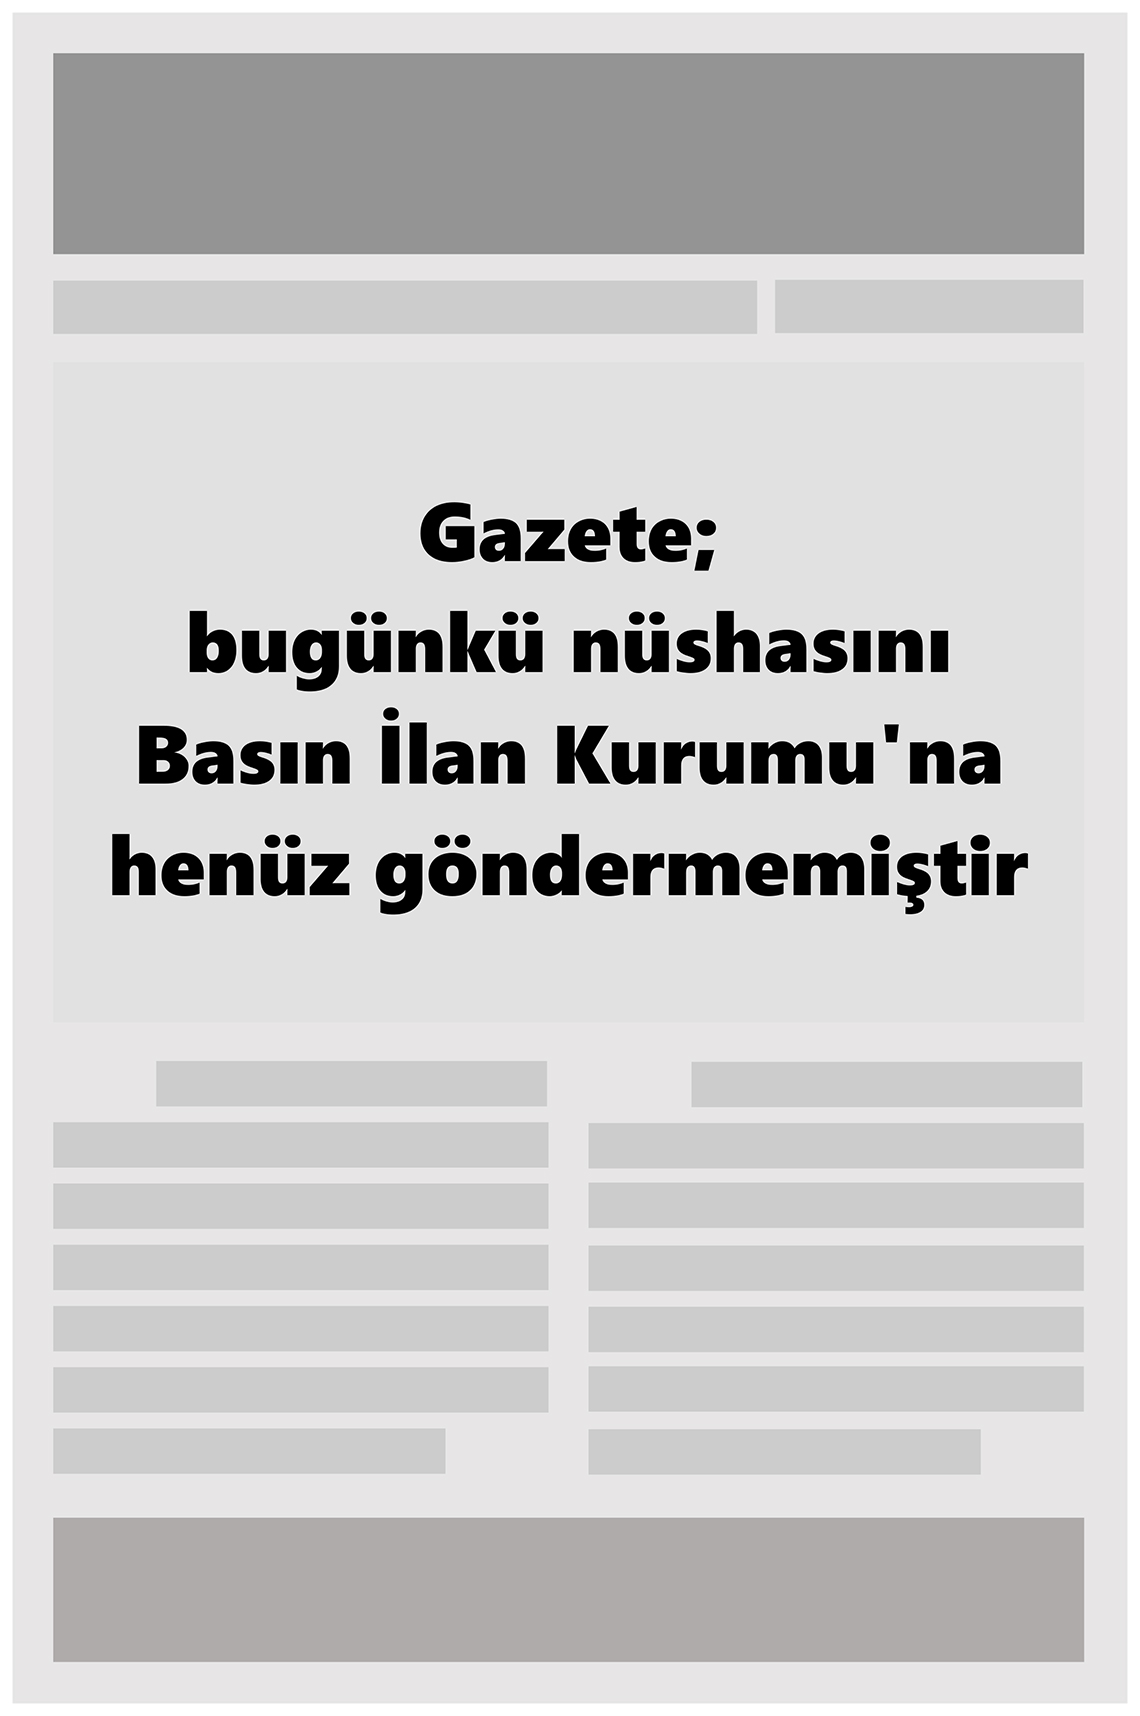 Polatlı İstiklal Gazete Manşeti